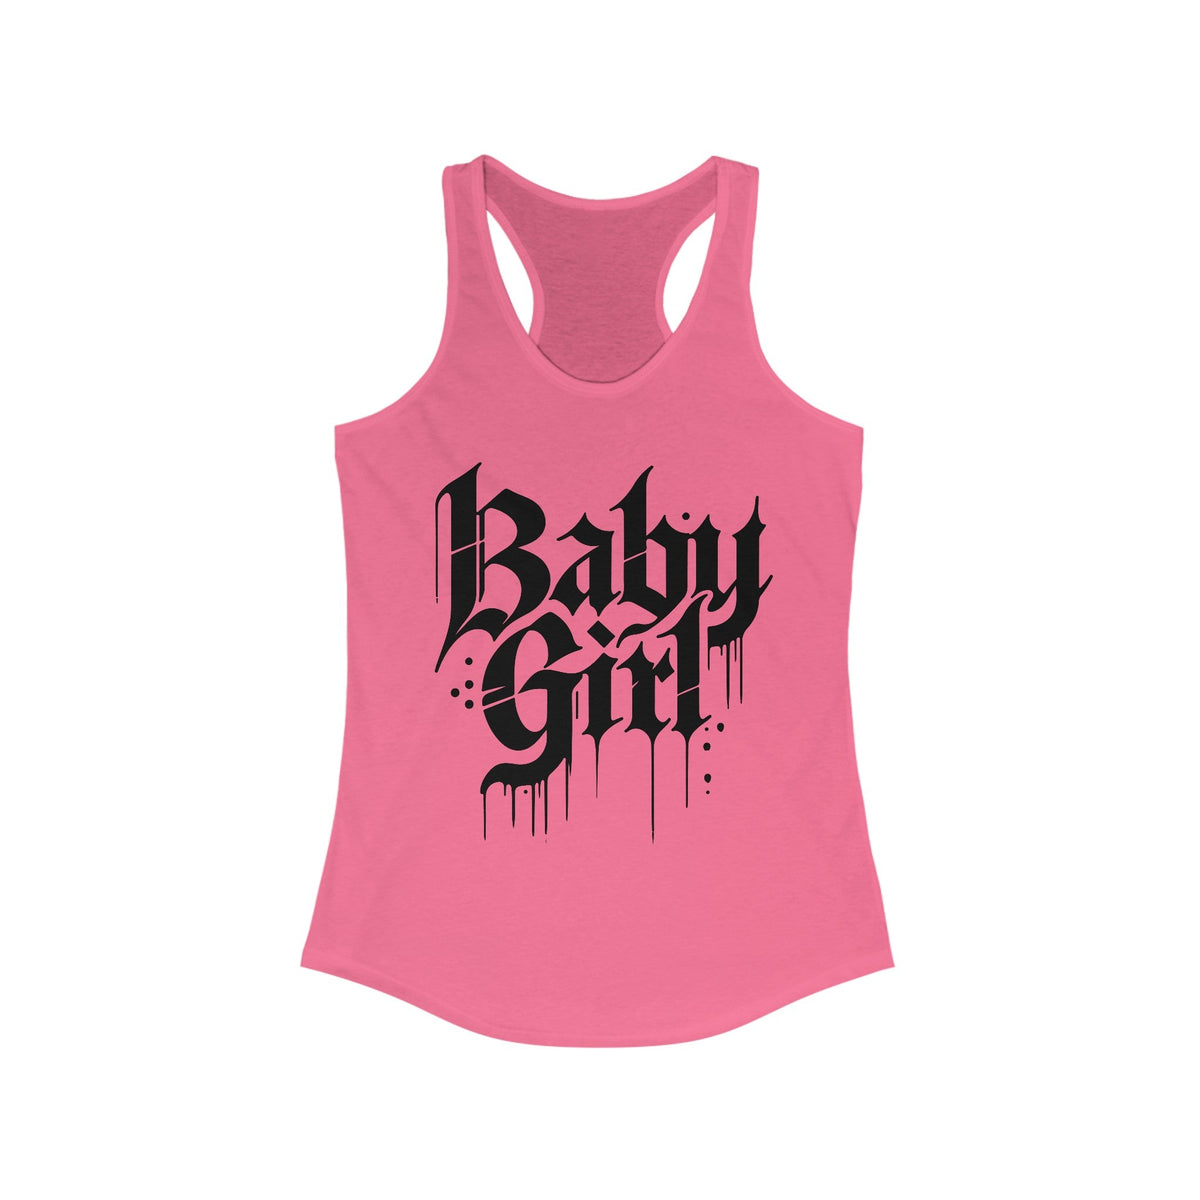 Baby Girl Women's Racerback Tank - Goth Cloth Co.Tank Top38964390434323793173